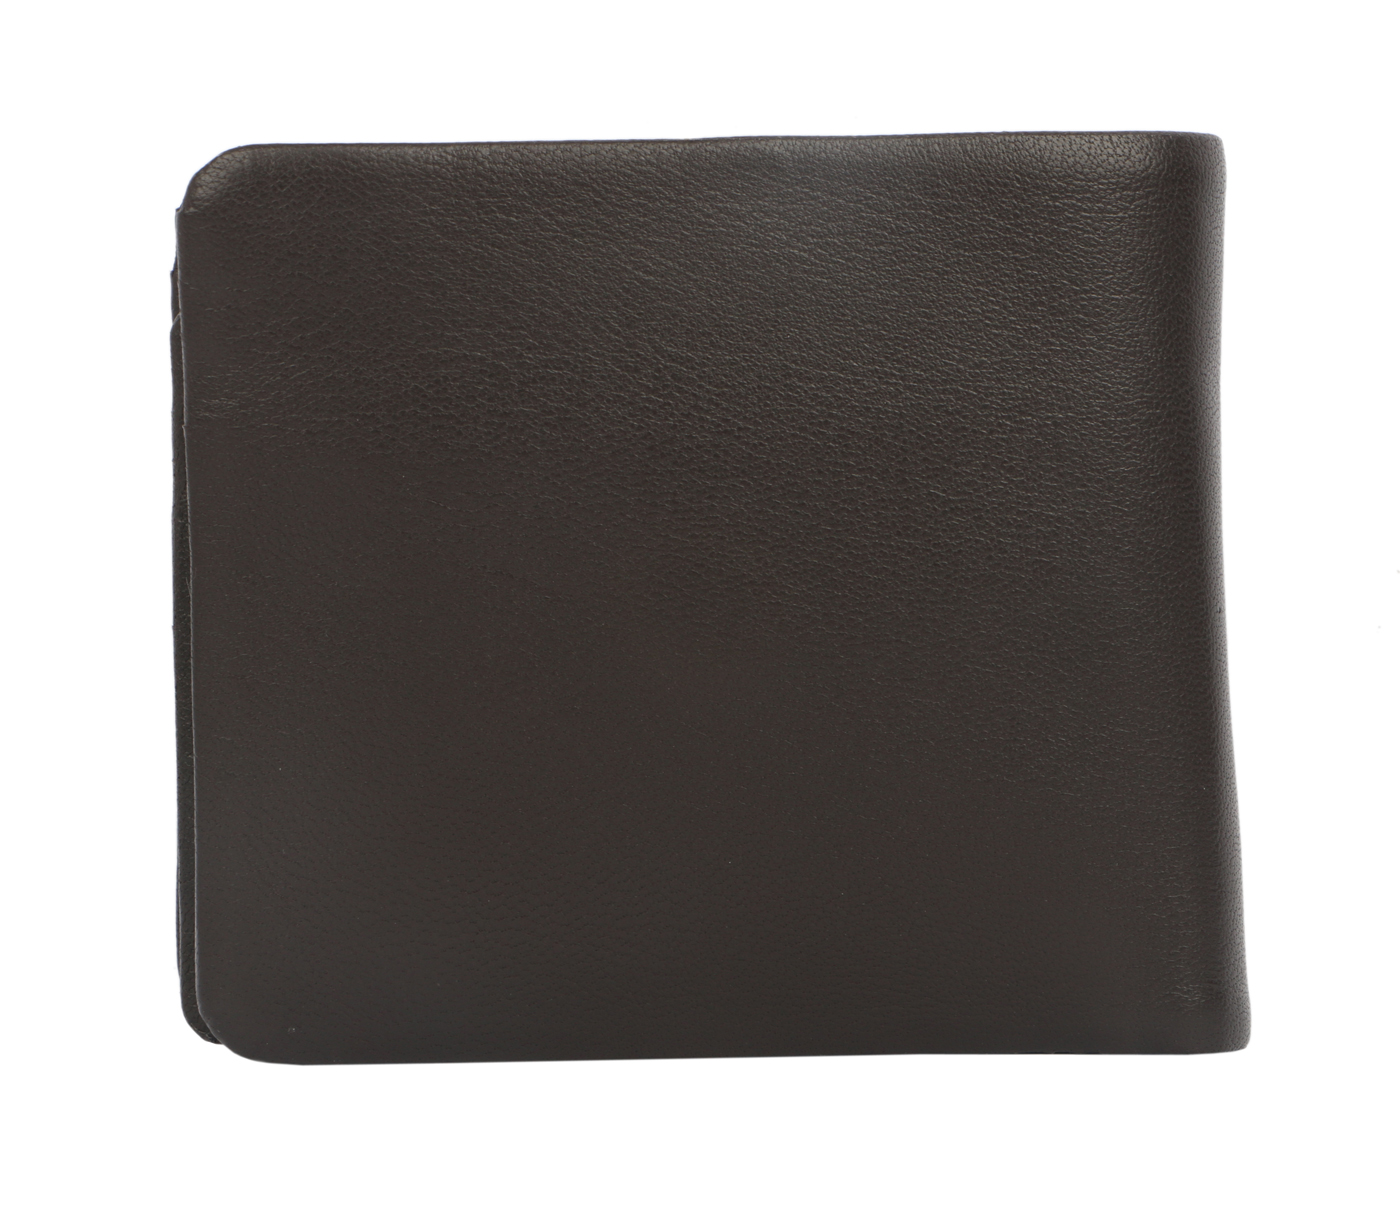 VW3-Almeda-Men's bifold wallet with coin pocket in Genuine Leather - Brown